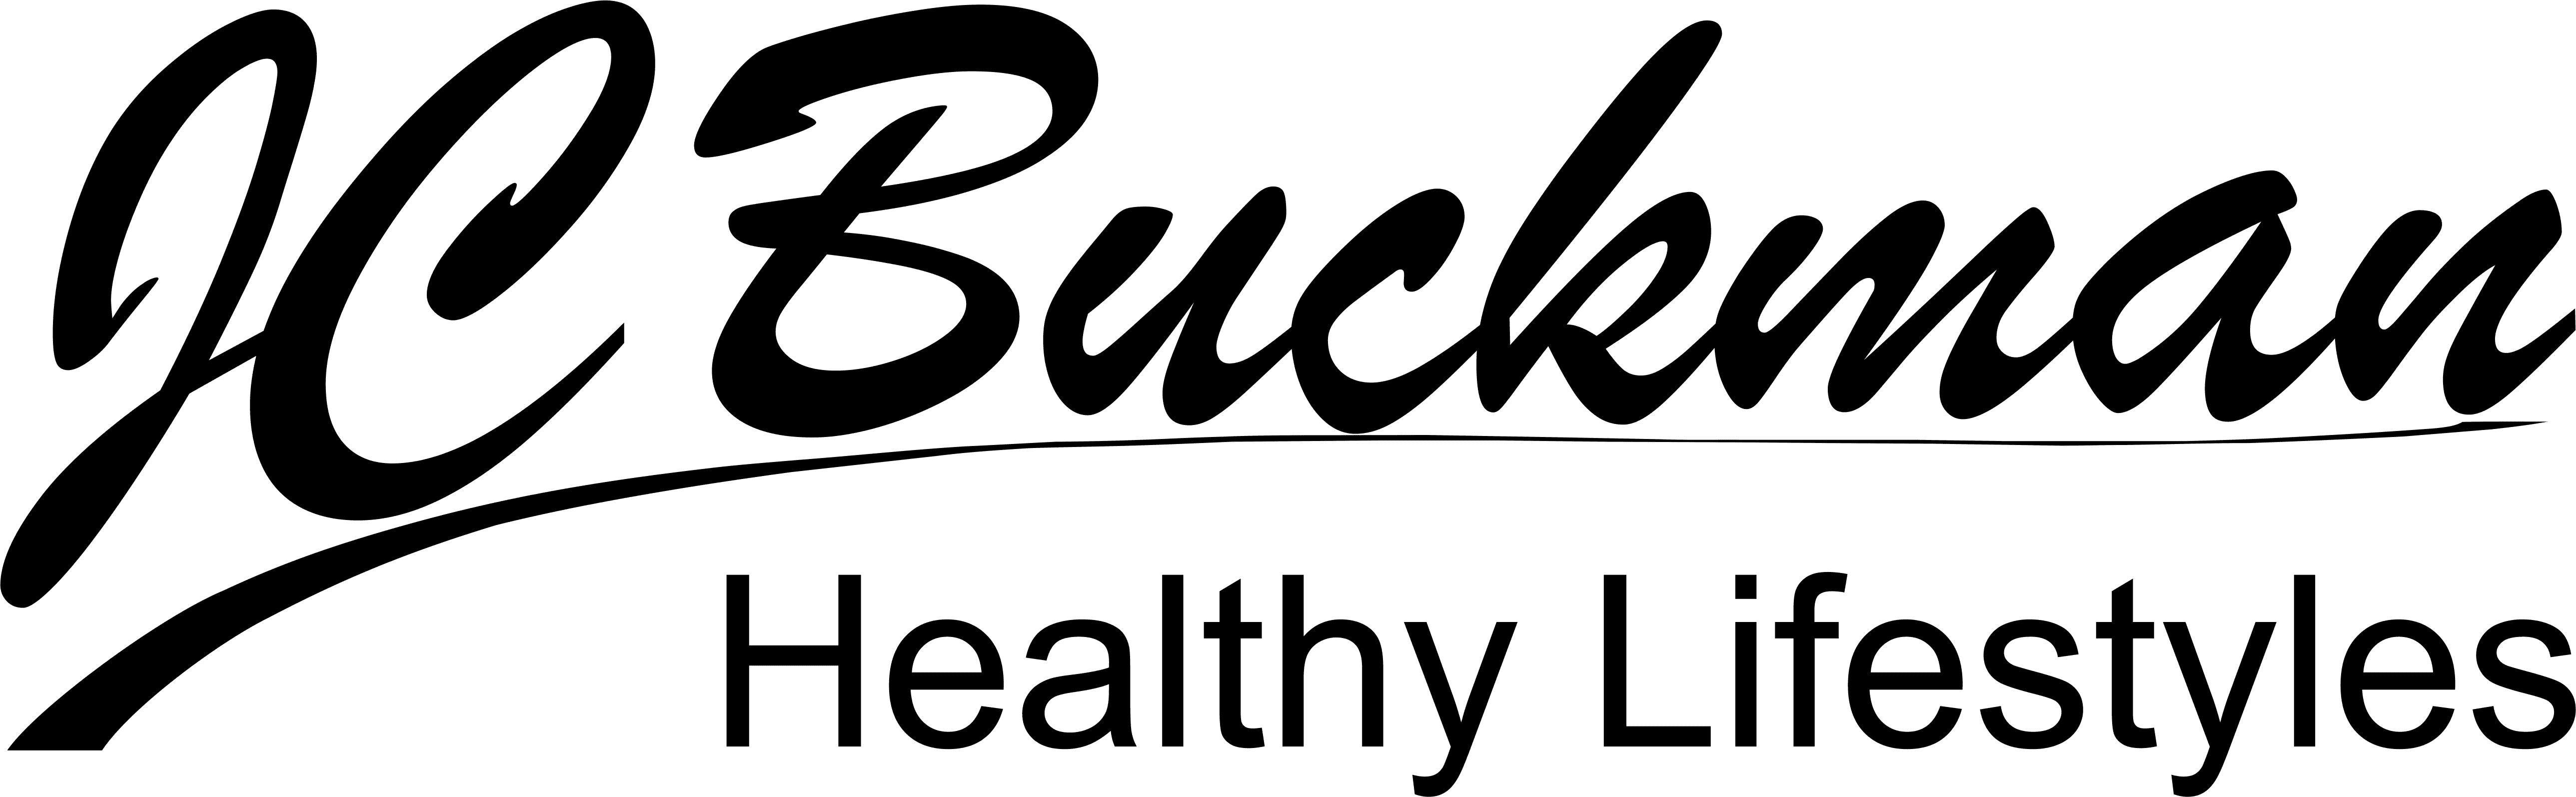 Buckman Logo - JC Buckman | Best Health Care Products in Pakistan